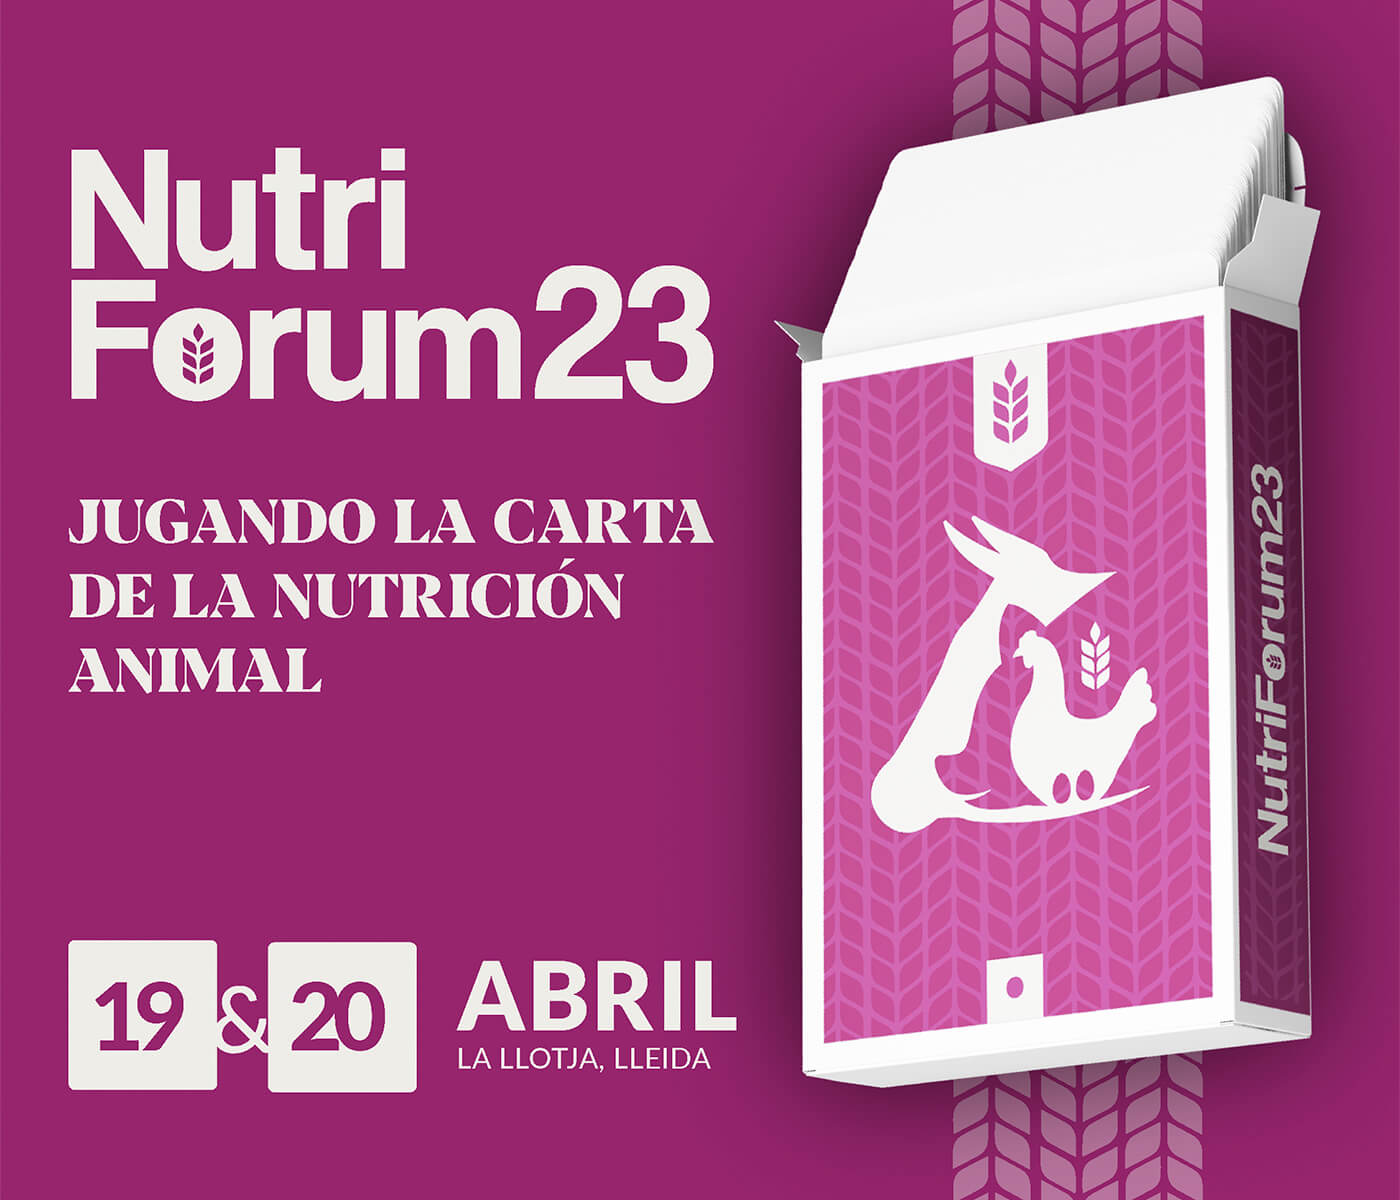 NutriForum 2023, ¡la fórmula ganadora!